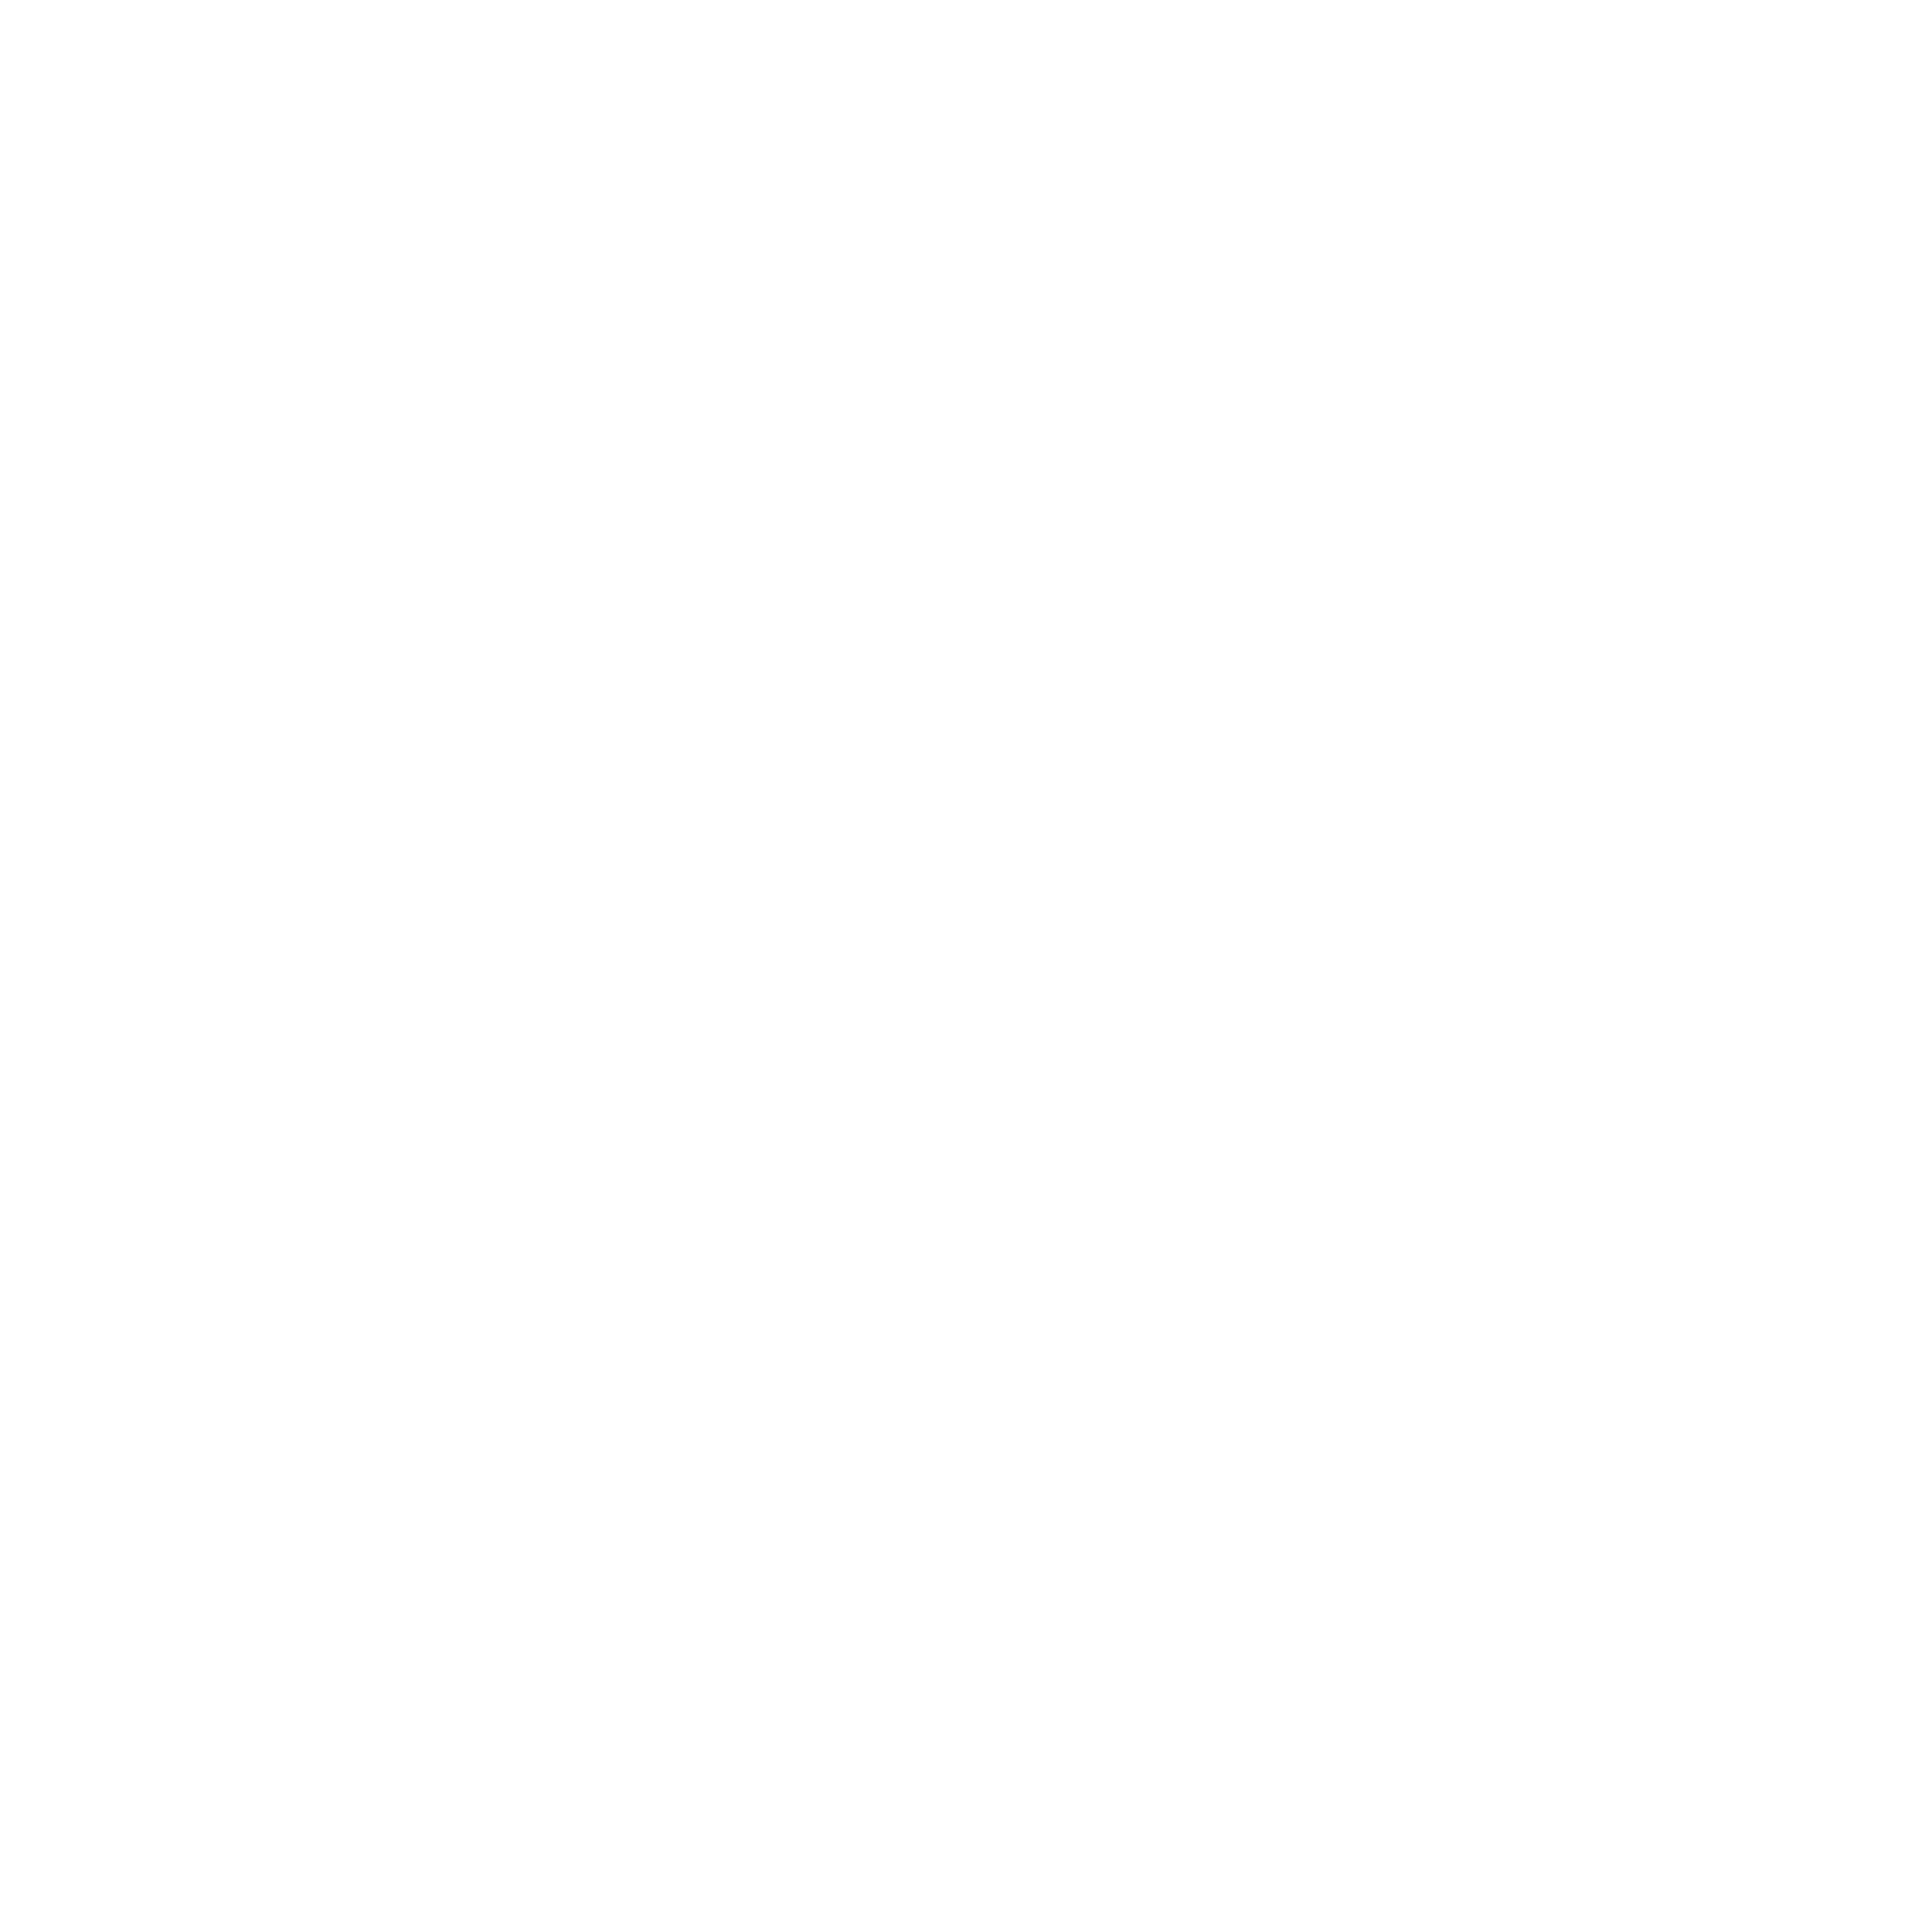 Carolina Herrera Logo - Carolina Herrera Logo PNG Transparent & SVG Vector - Freebie Supply